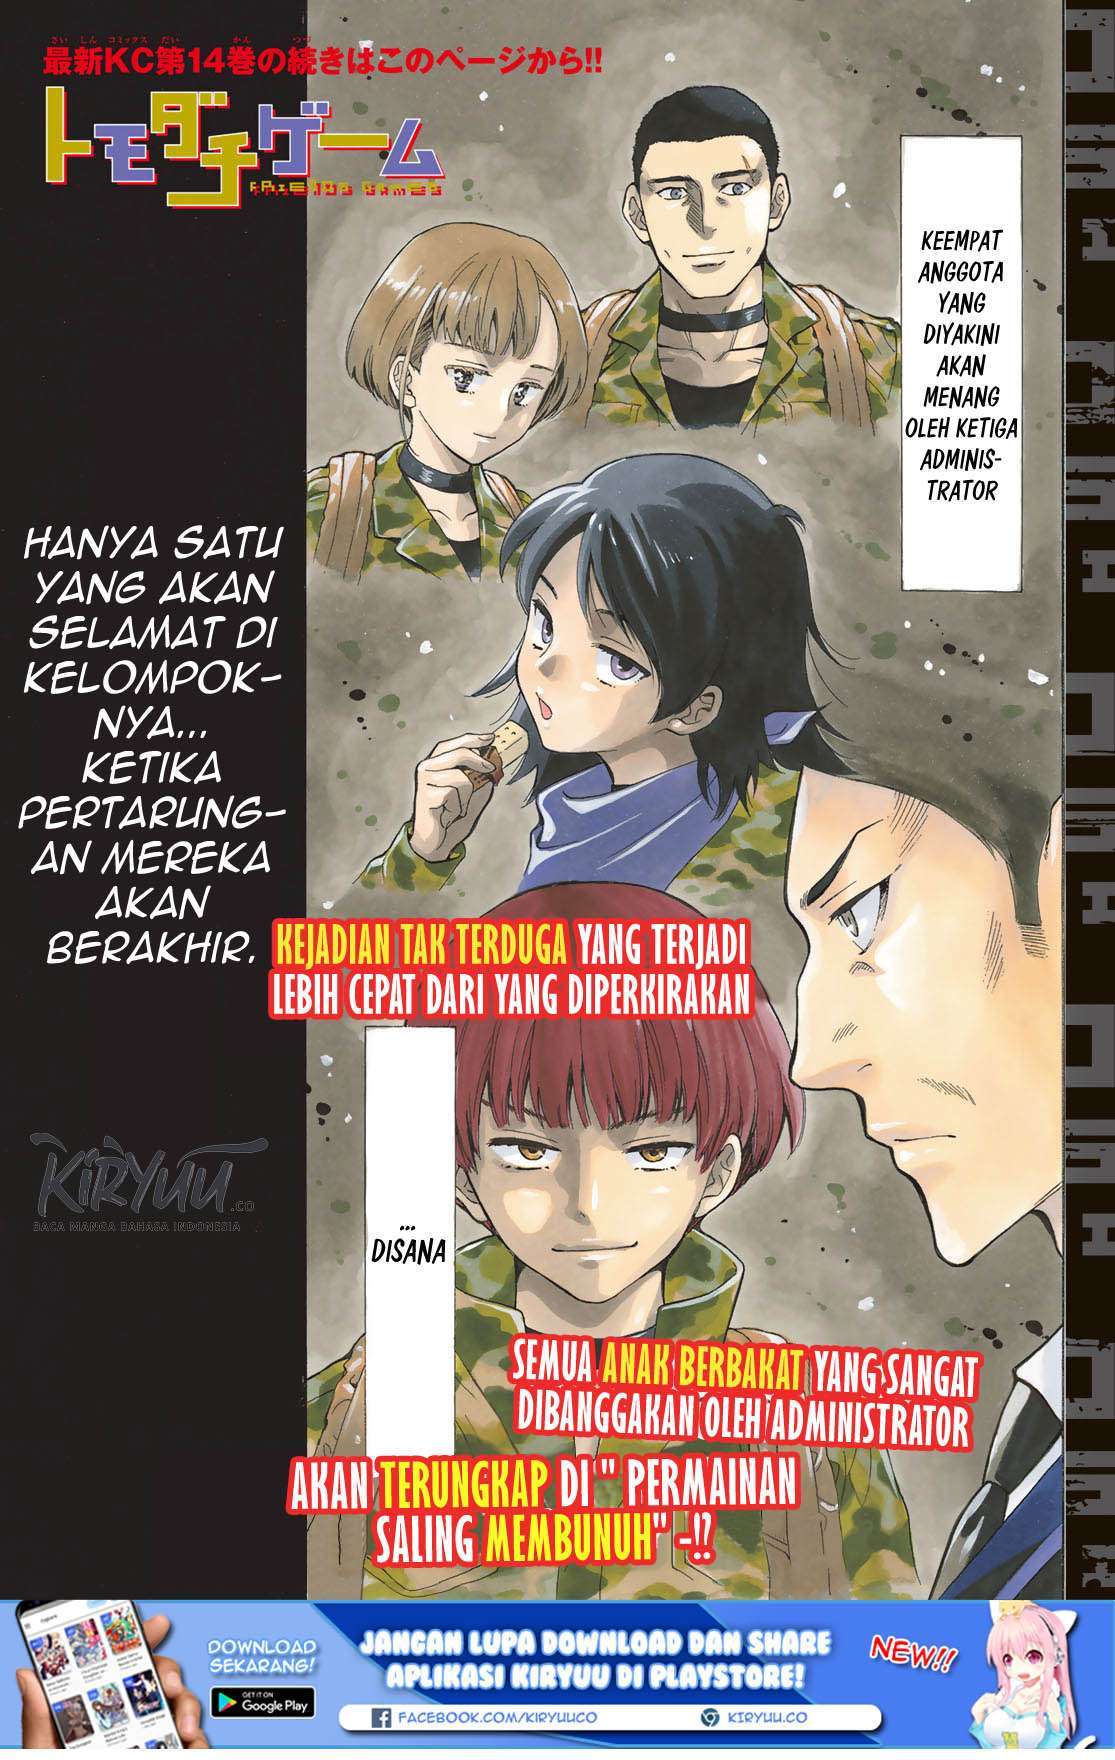 Tomodachi Game Chapter 69 Bahasa Indonesia